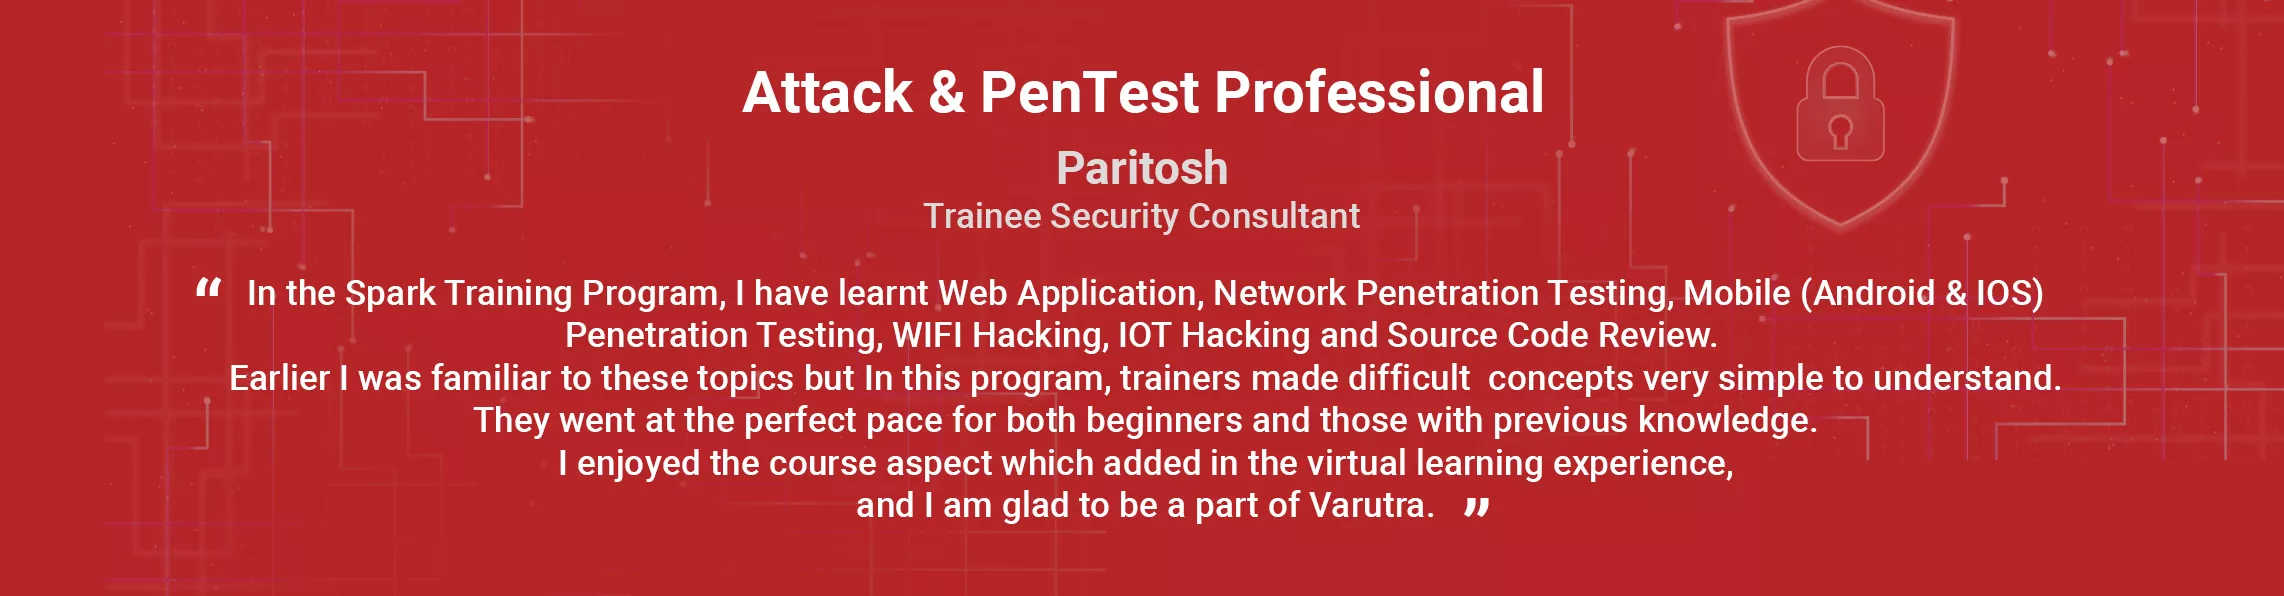 Cyber Security Training Cyber Security Training Paritosh Testimonial